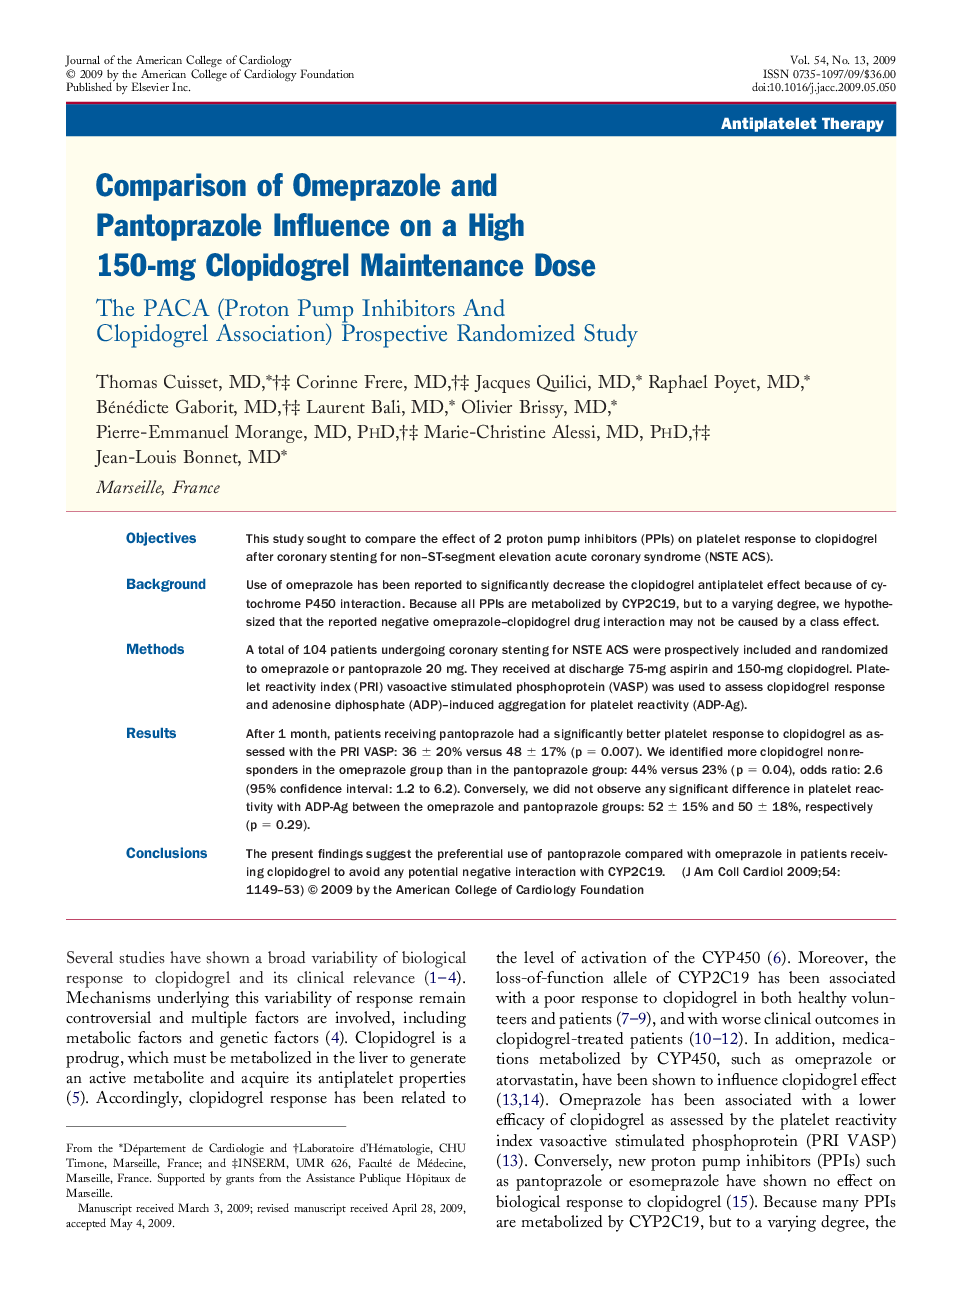 Comparison of Omeprazole and Pantoprazole Influence on a High 150-mg Clopidogrel Maintenance Dose : The PACA (Proton Pump Inhibitors And Clopidogrel Association) Prospective Randomized Study